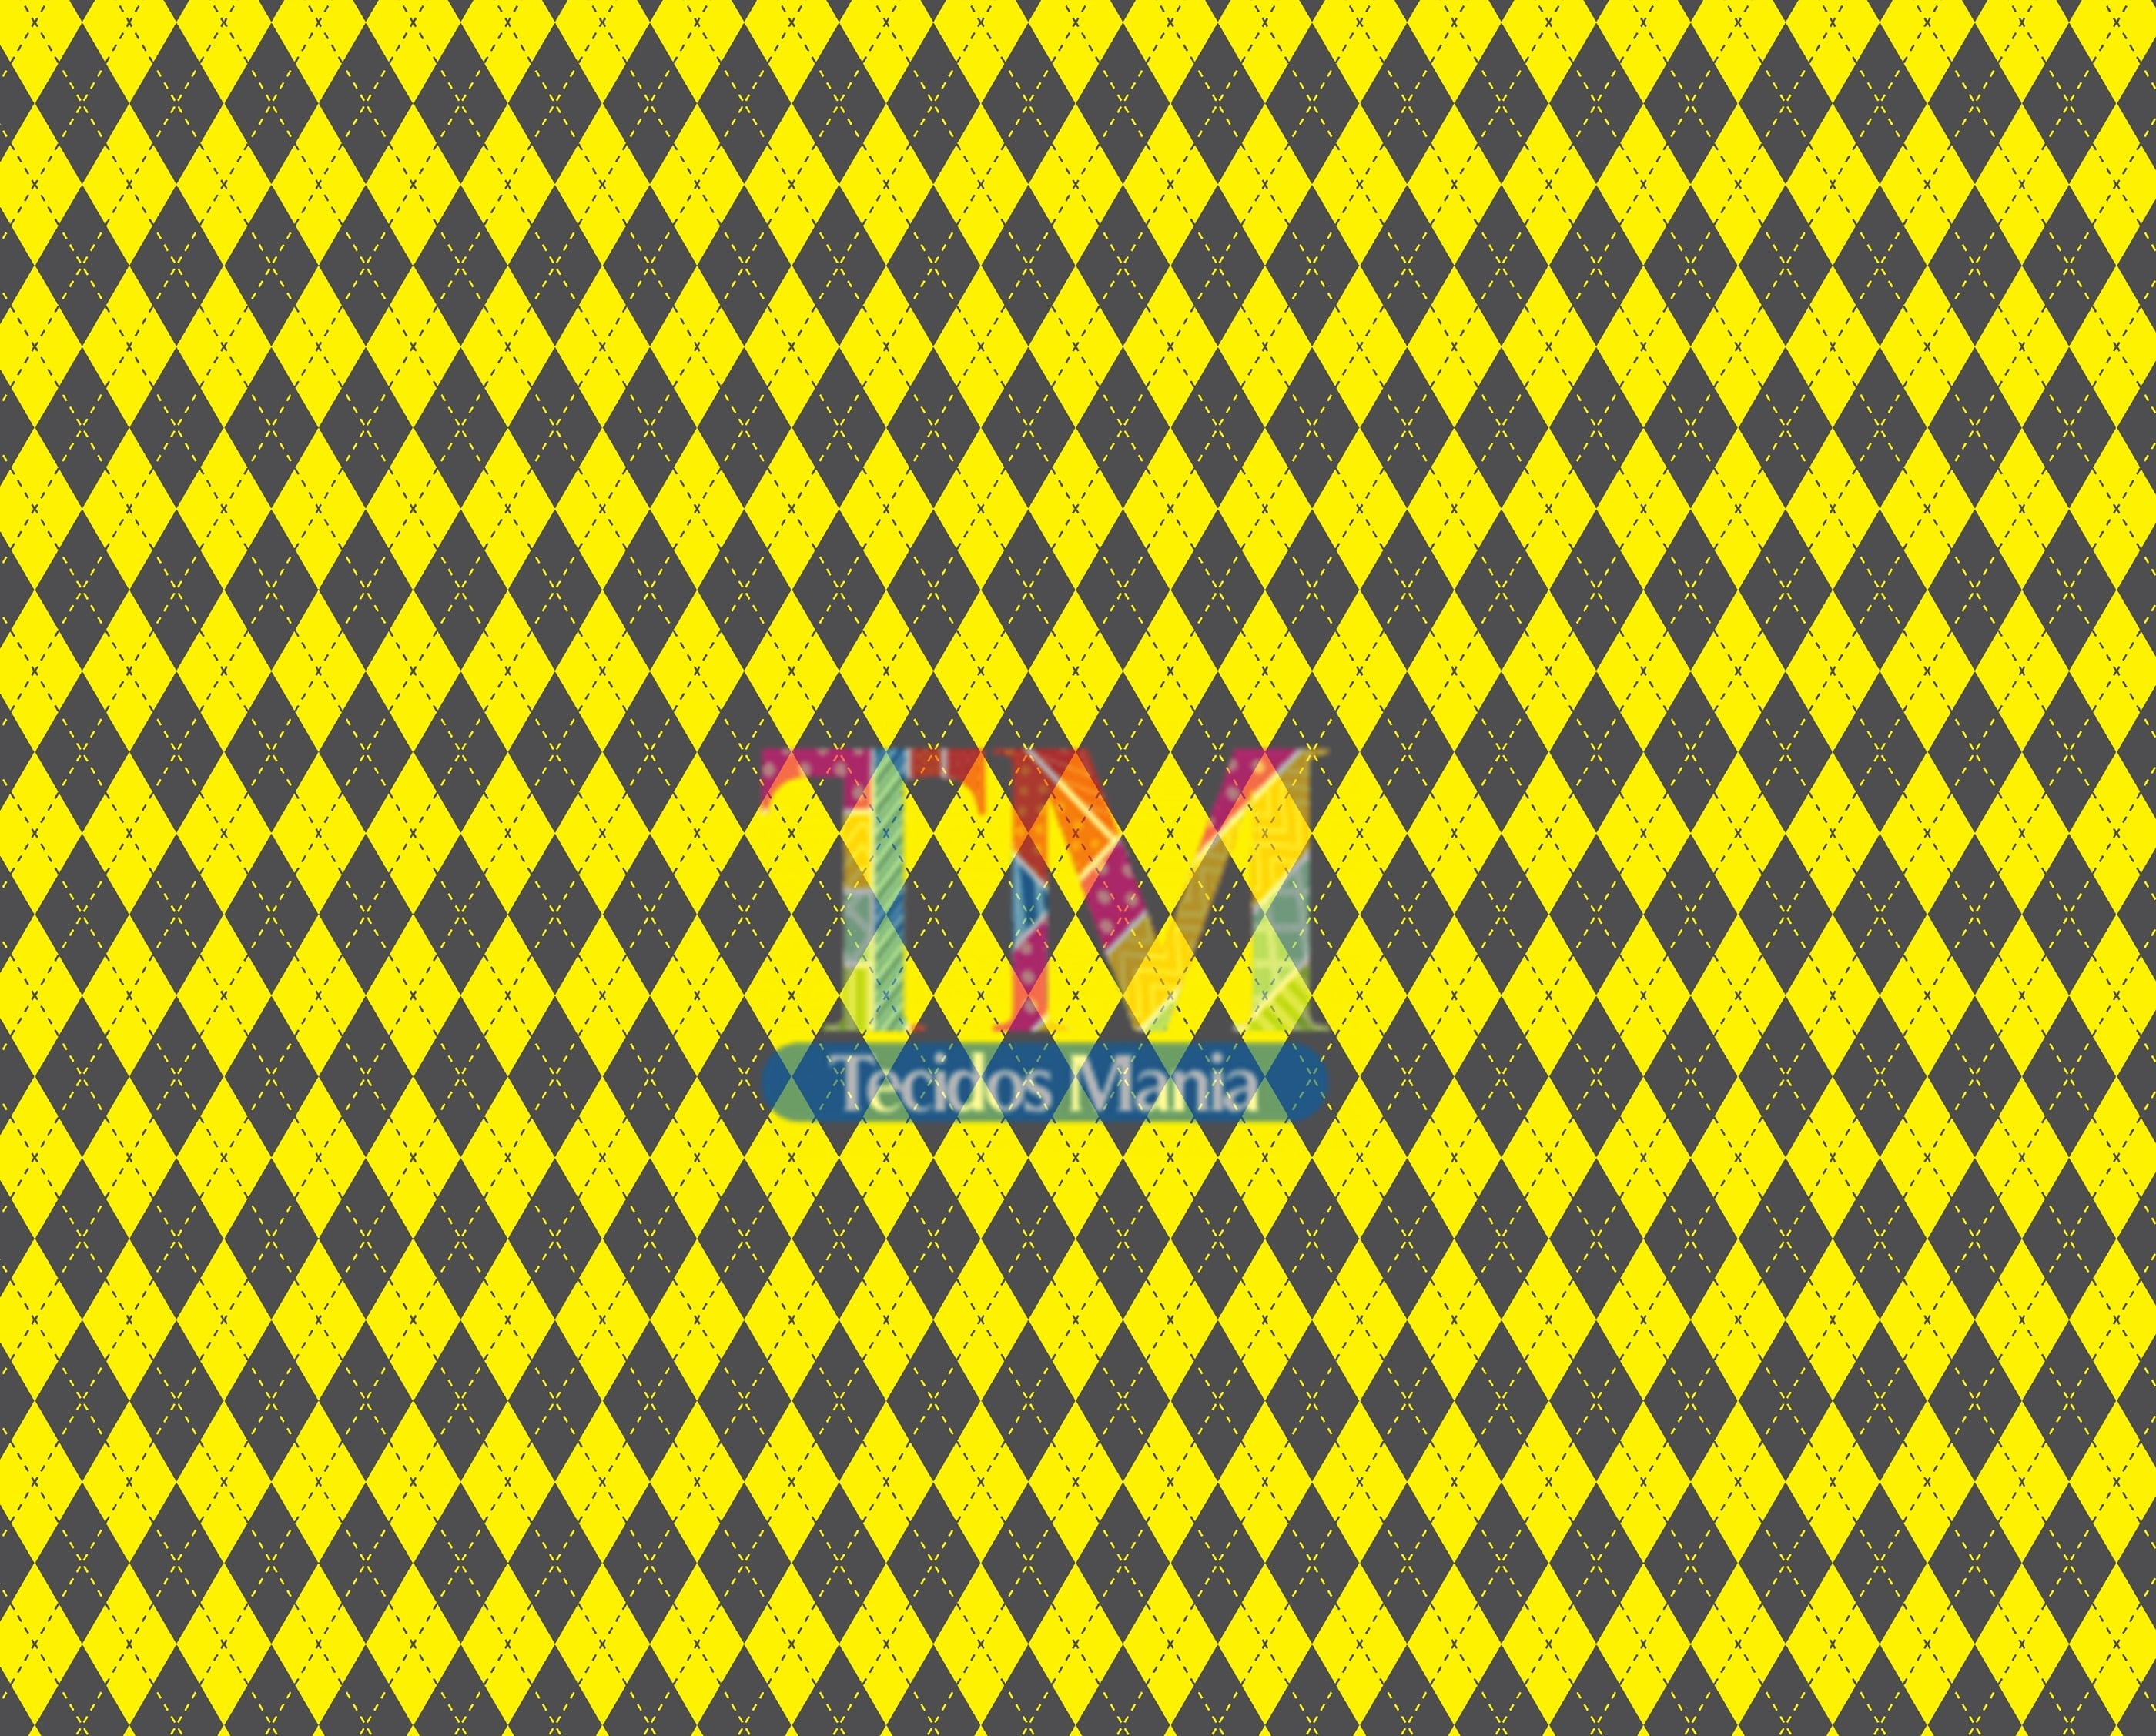 Tecido tricoline, microfibra ou gabardine estampado - Harry Potter - Xadrez - amarelo com cinza